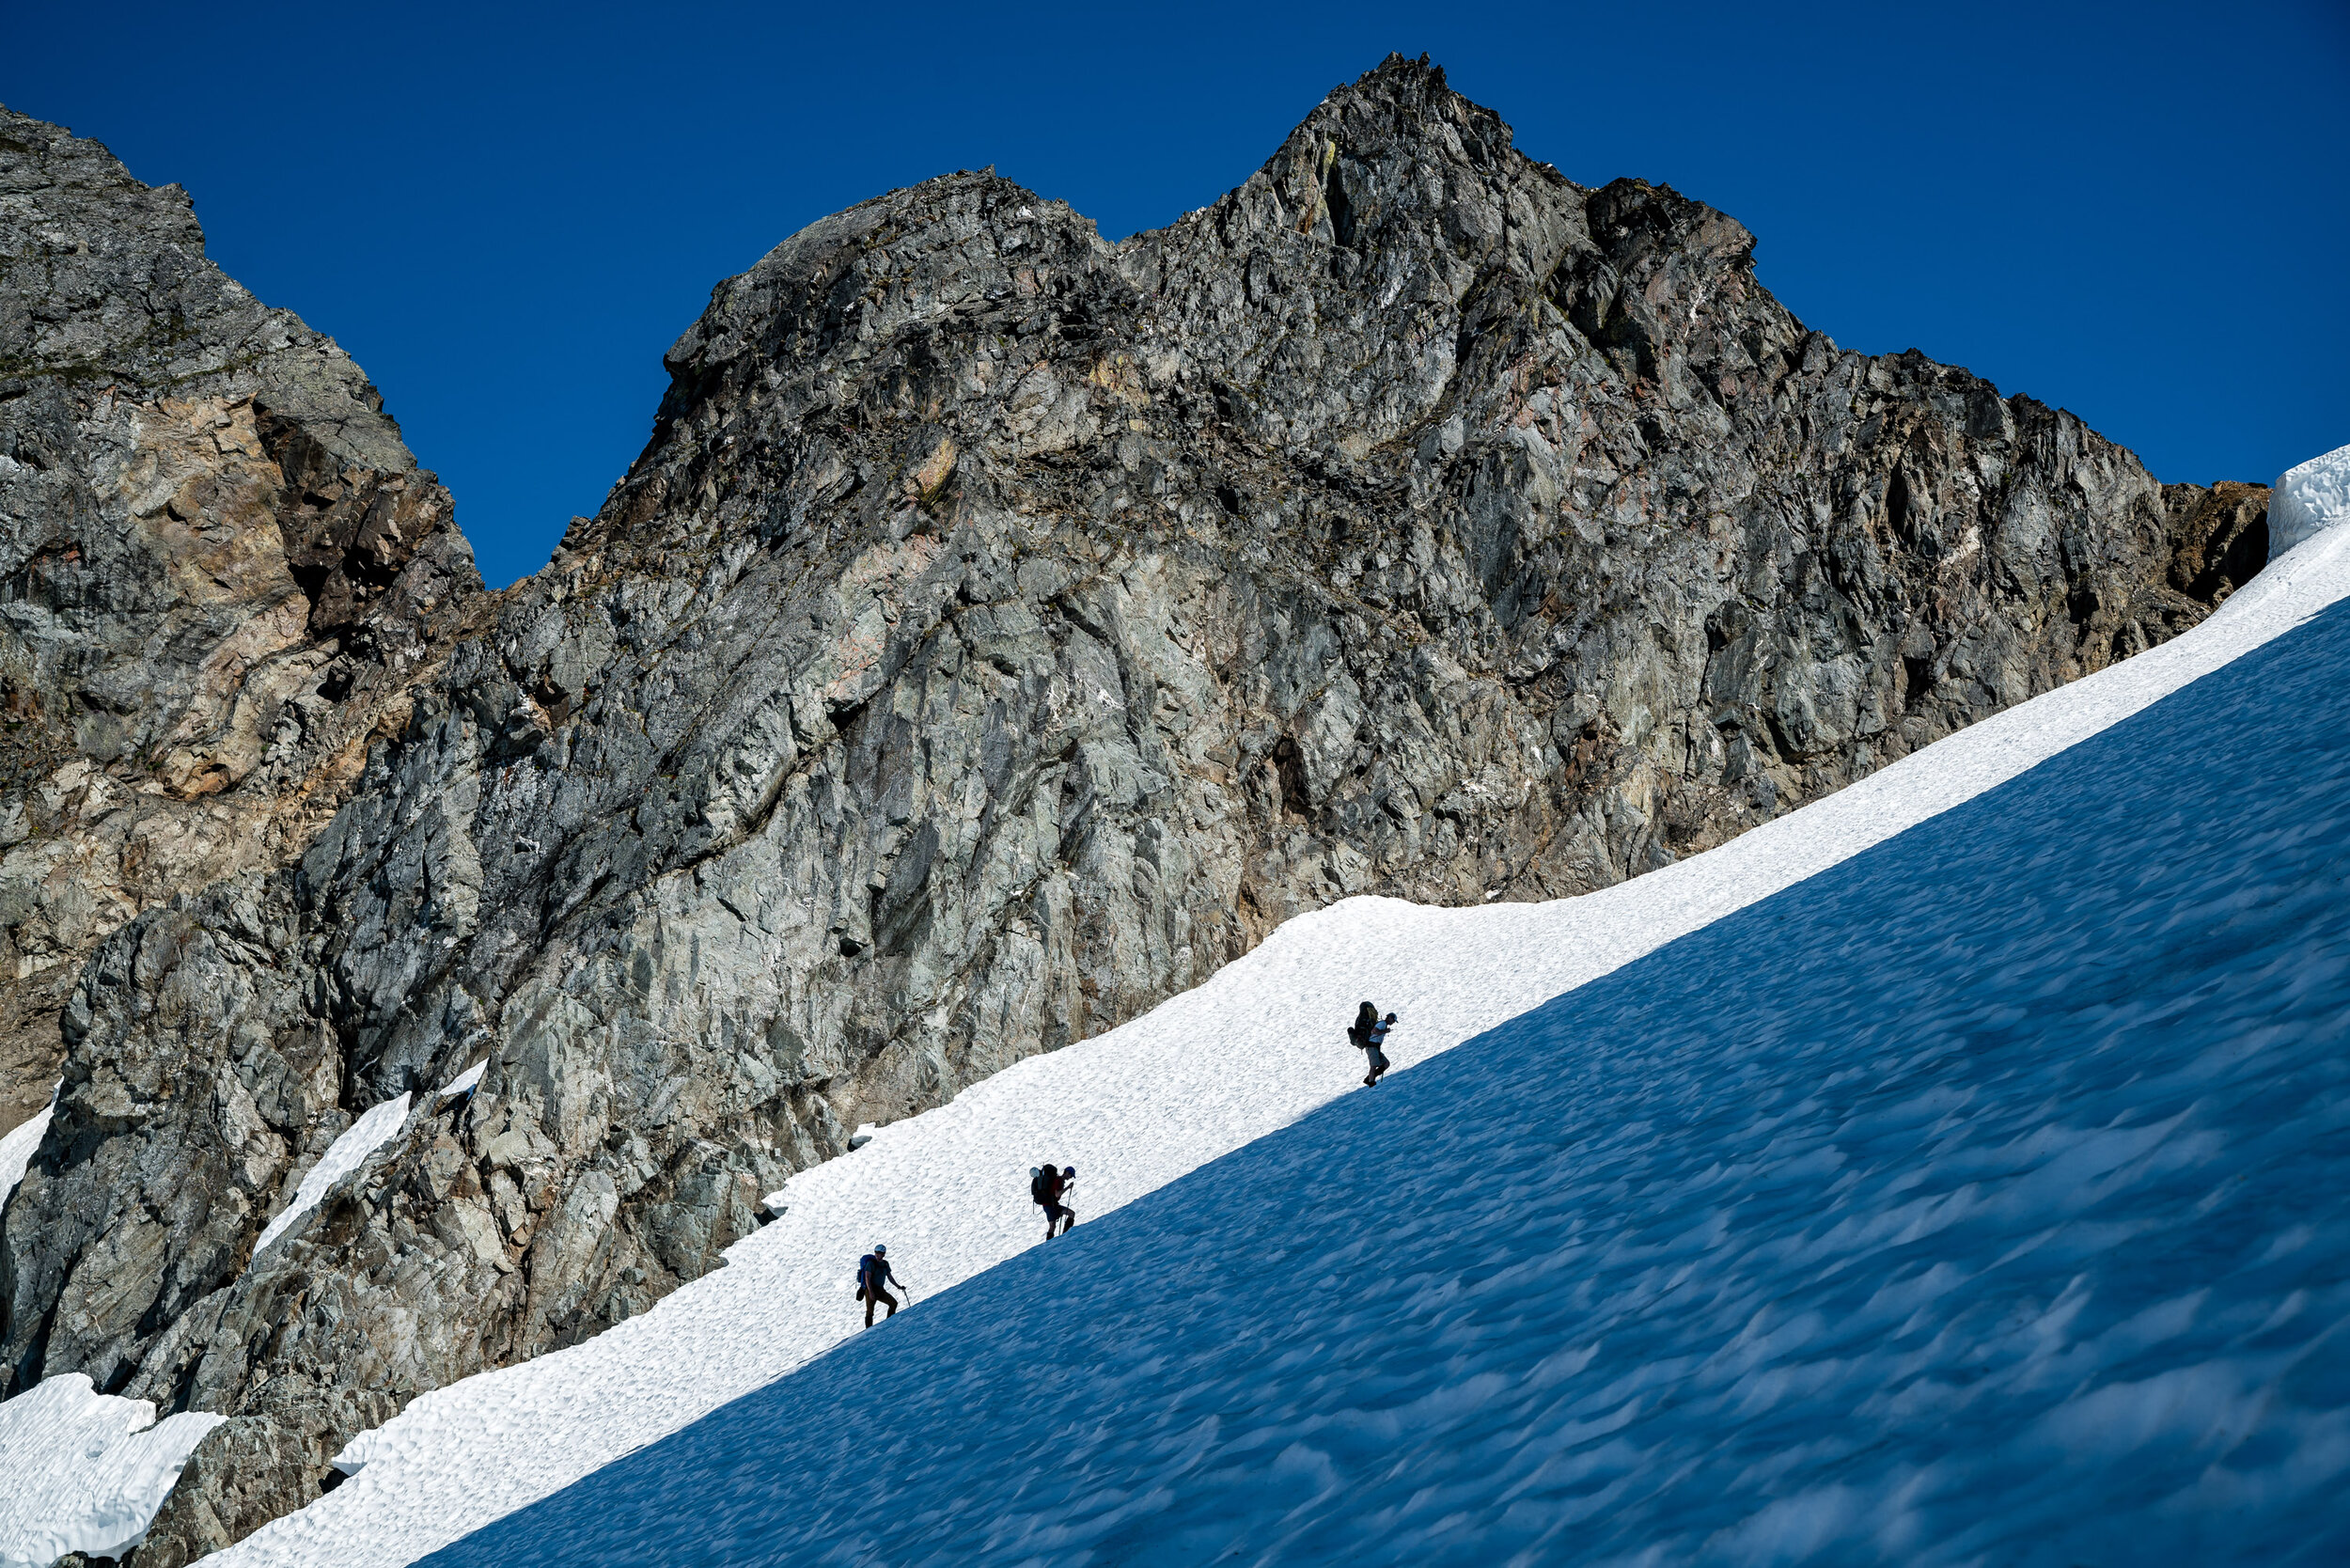  Adventure: A group of climbers ascending the Cache glacier on the Ptarmigan Traverse, North Cascades, Washington 